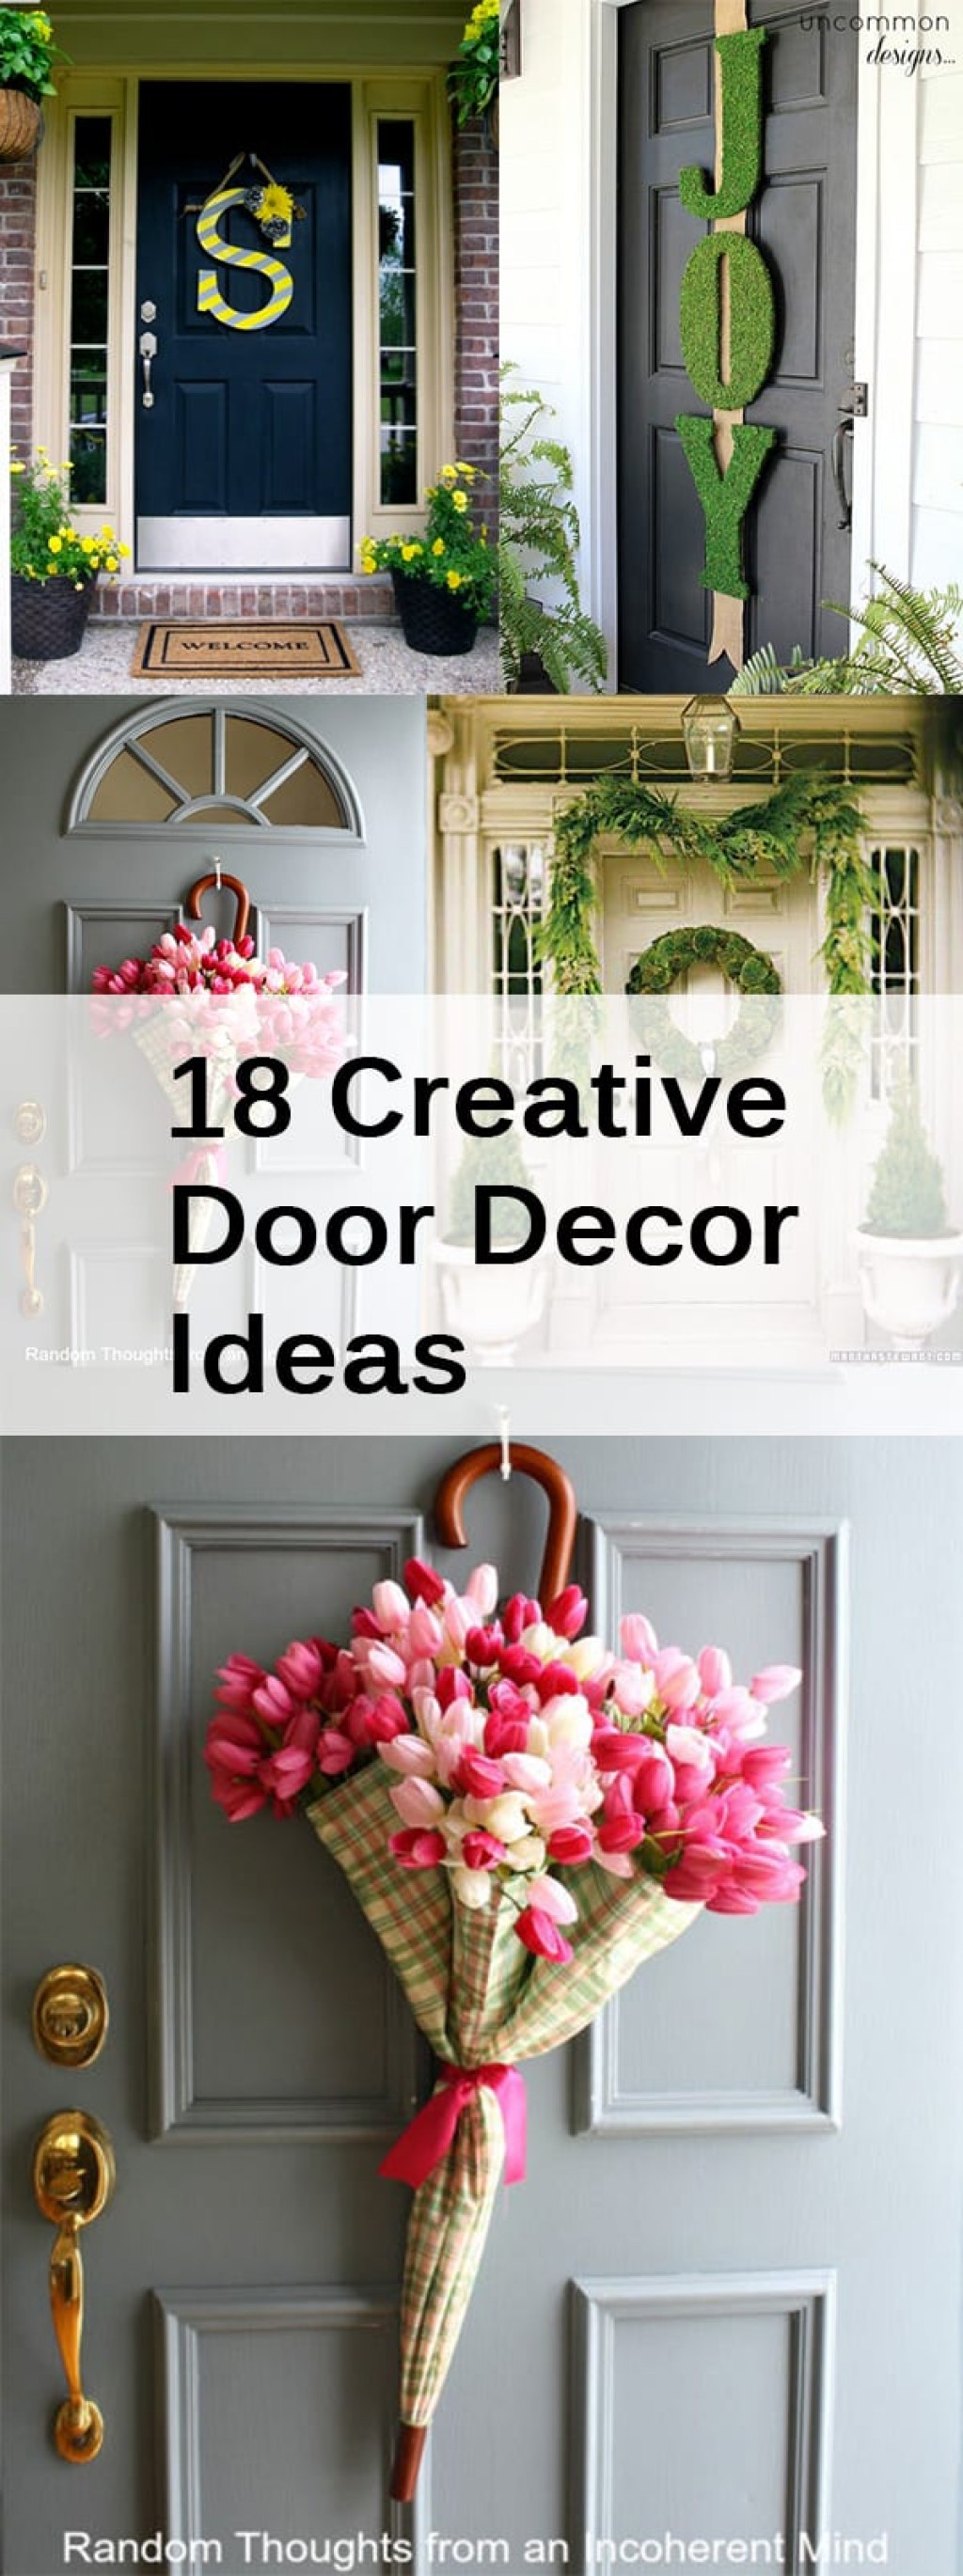 creative door decor ideas how to build it